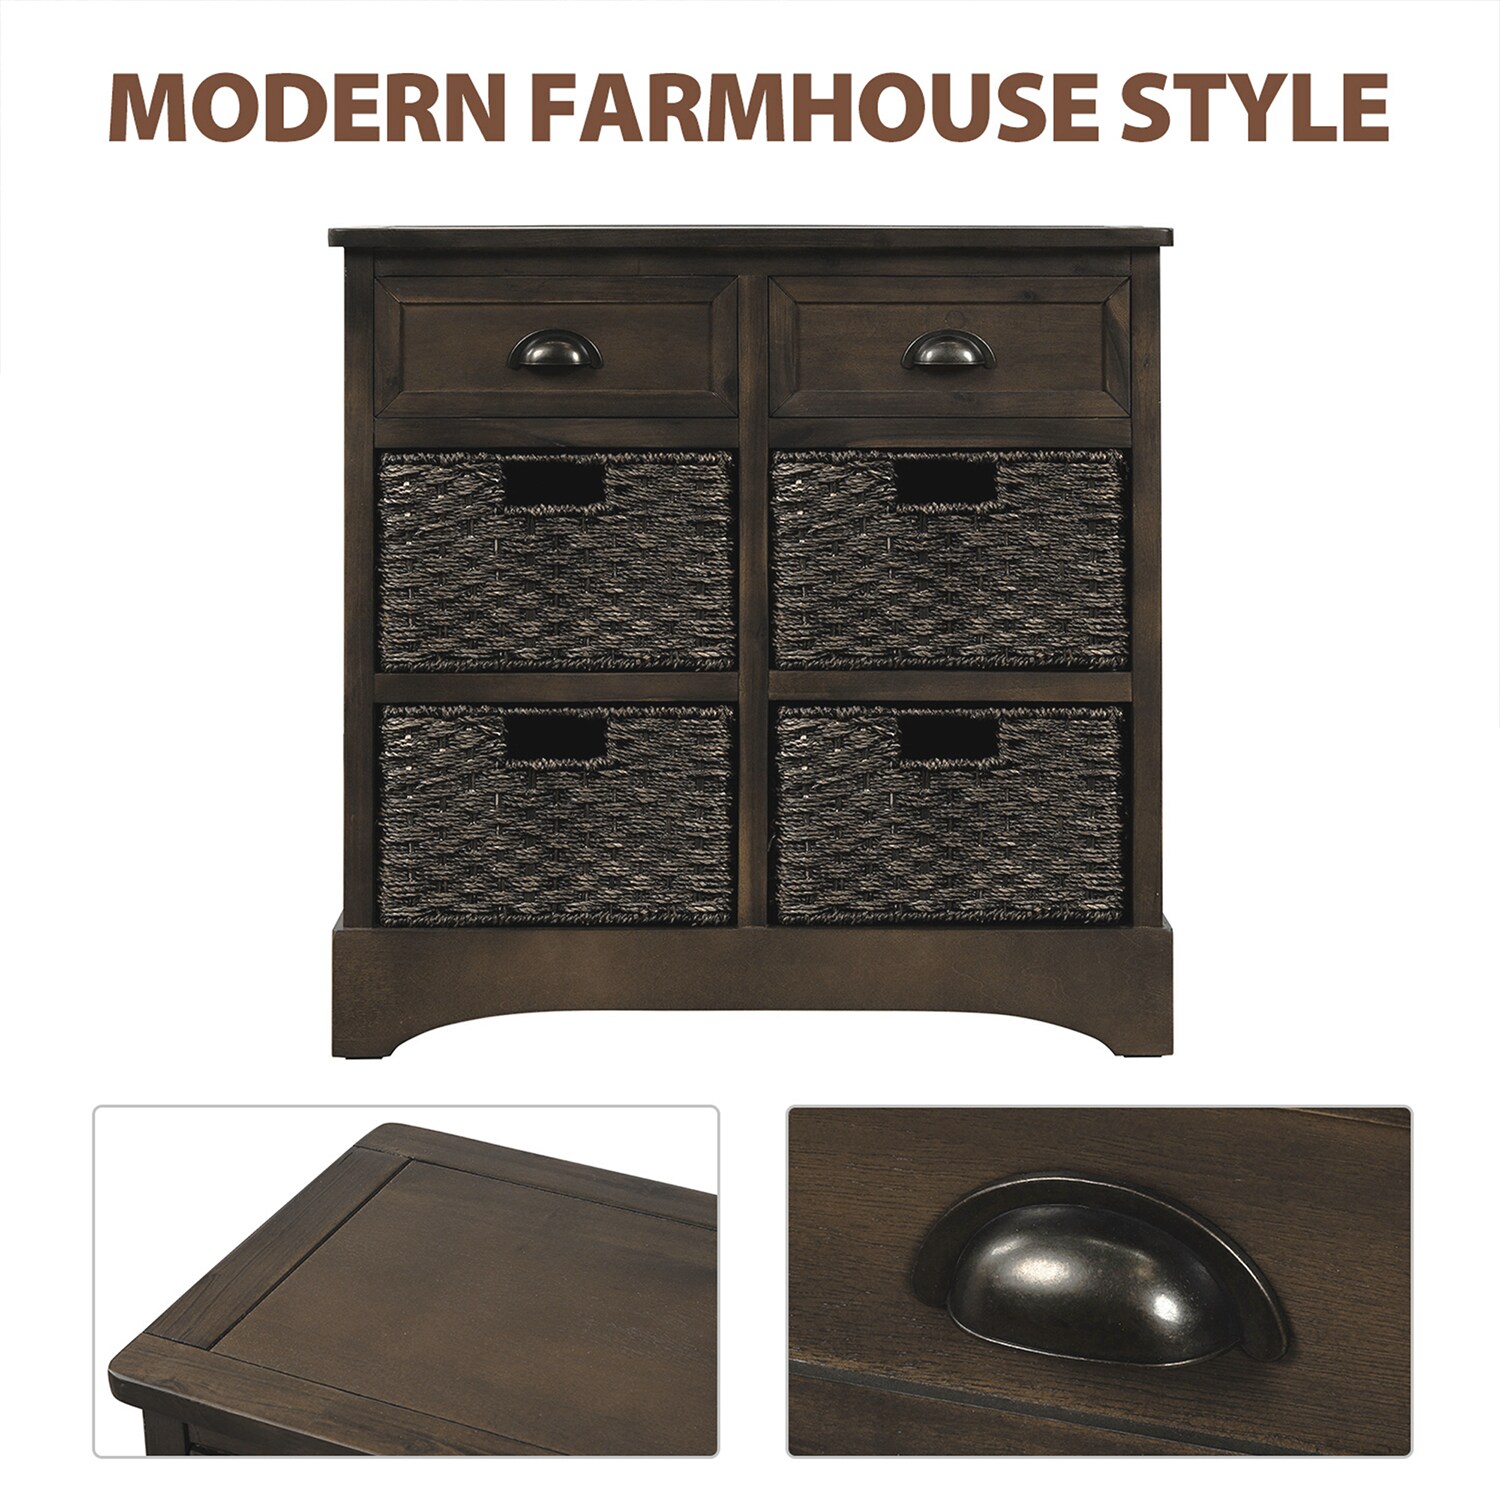 Mondawe Farmhouse Mdf Panels Console Table at Lowes.com